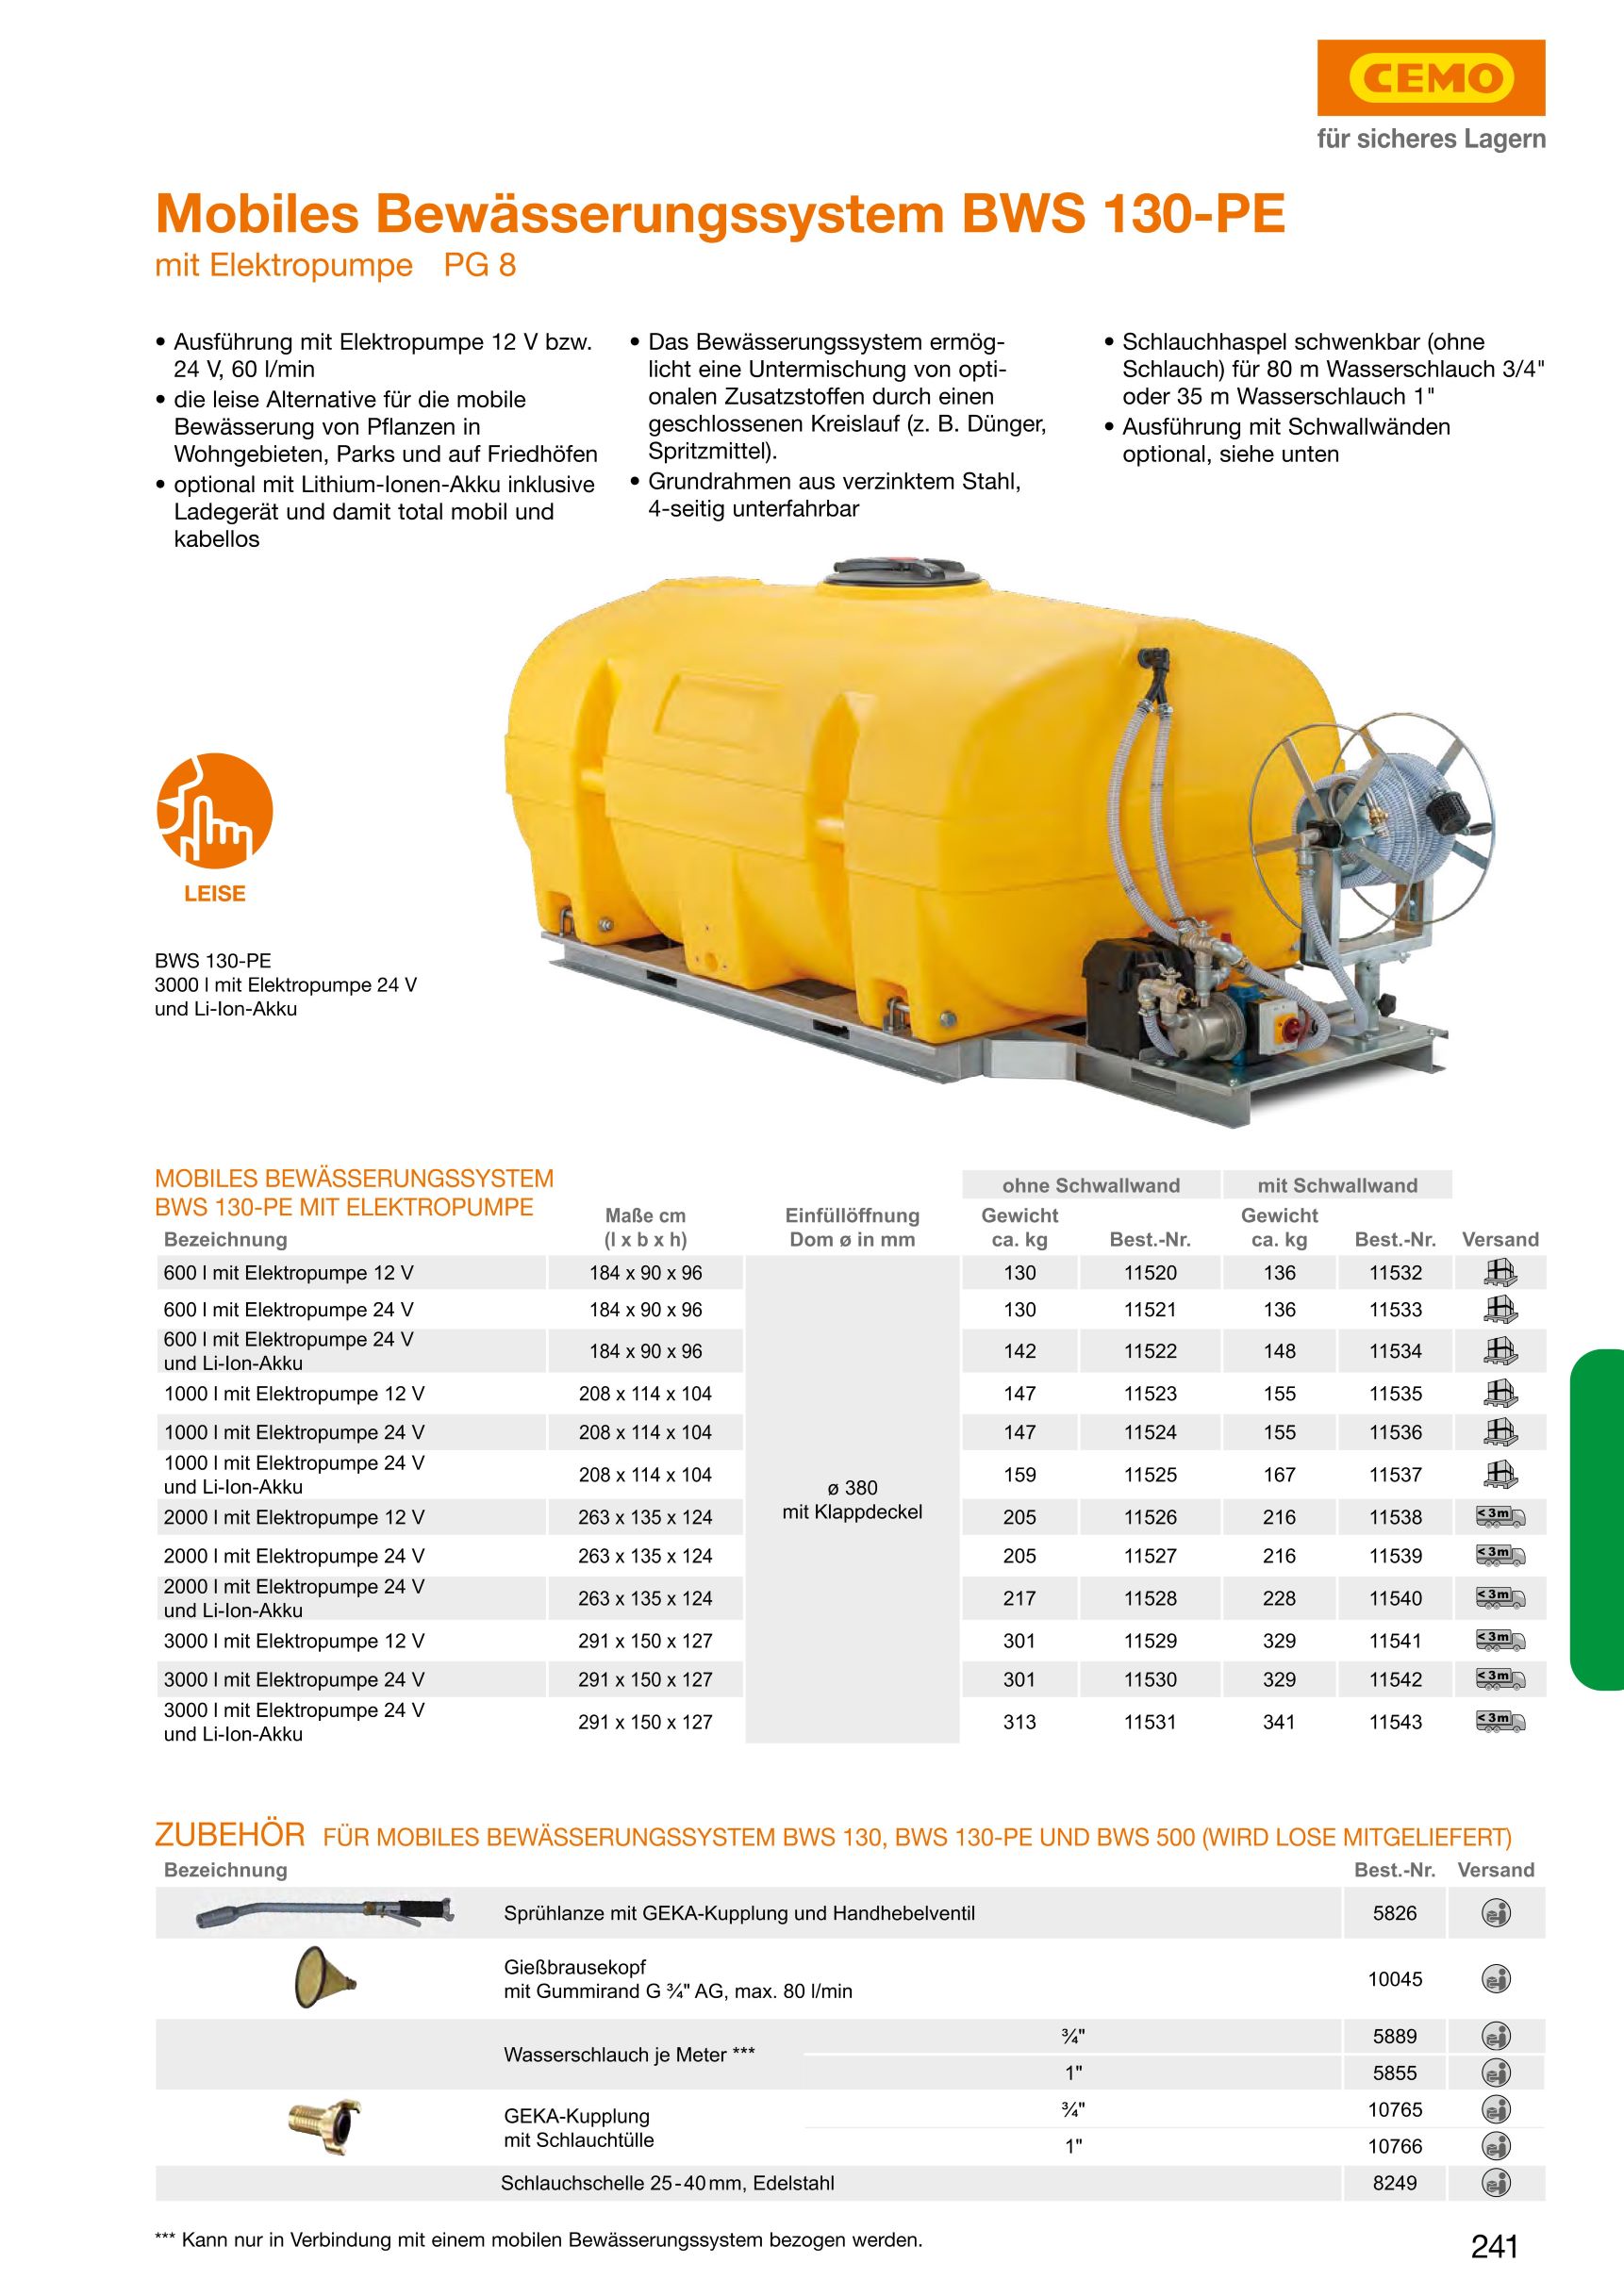 CEMO Mobiles Bewässerungssystem BWS 130-PE, 1000 l, 24 V Pumpe, Schwallwände - 11536